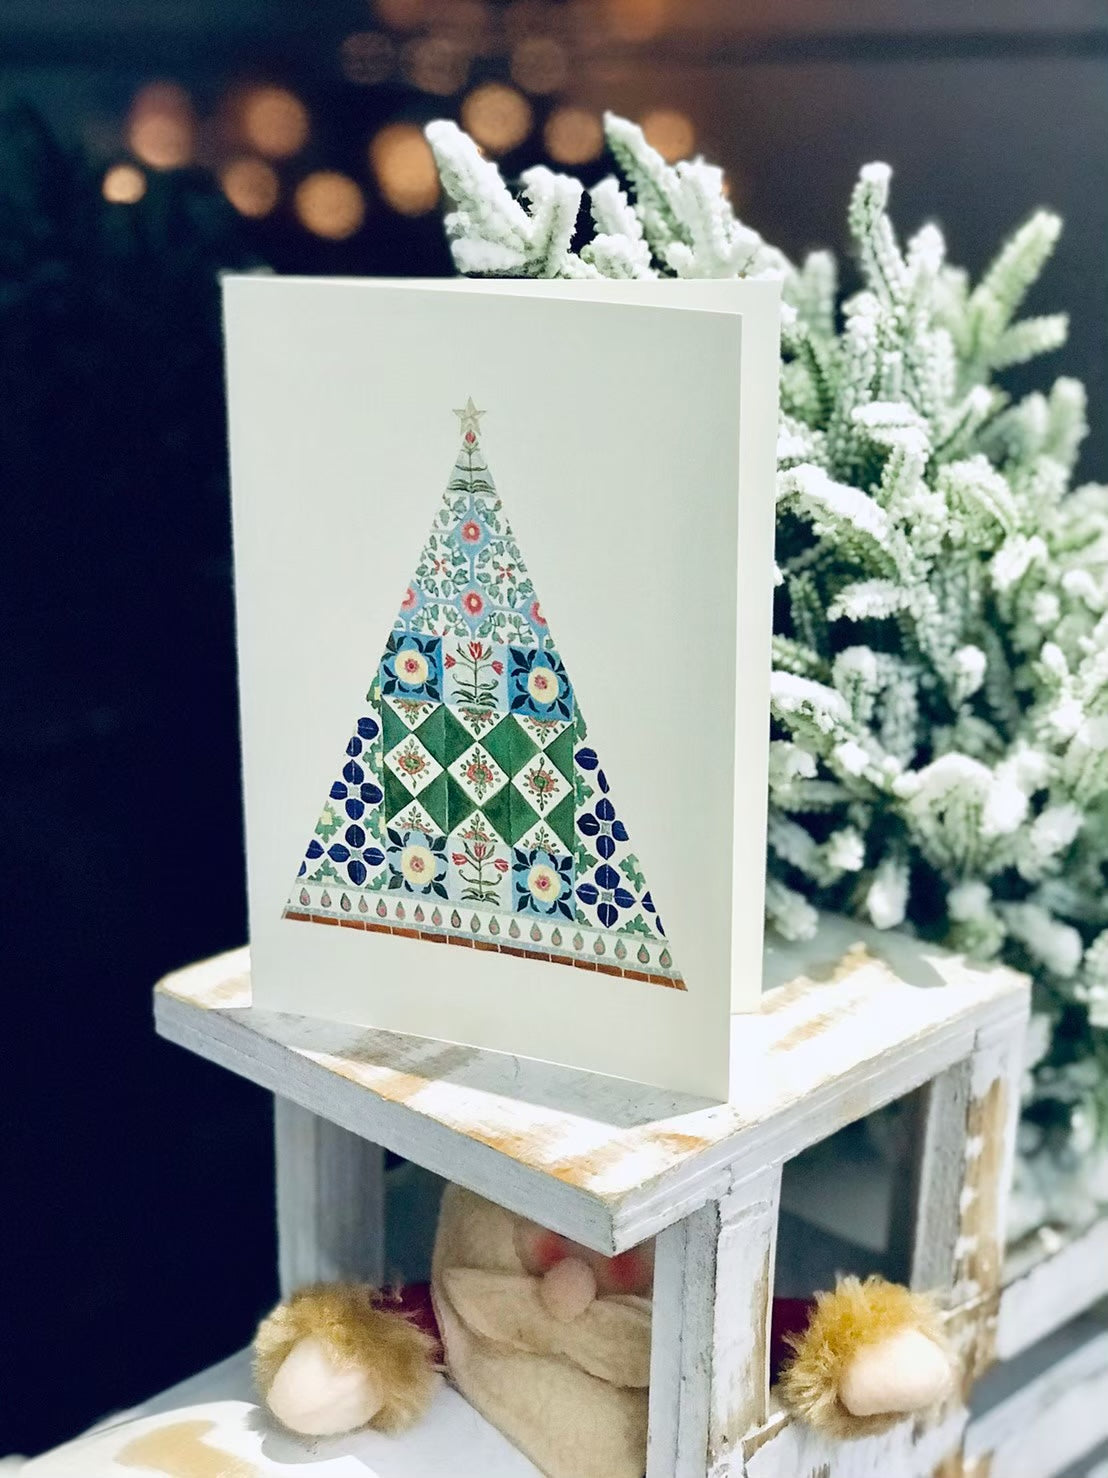 Taiwan old tiles Christmas tree card